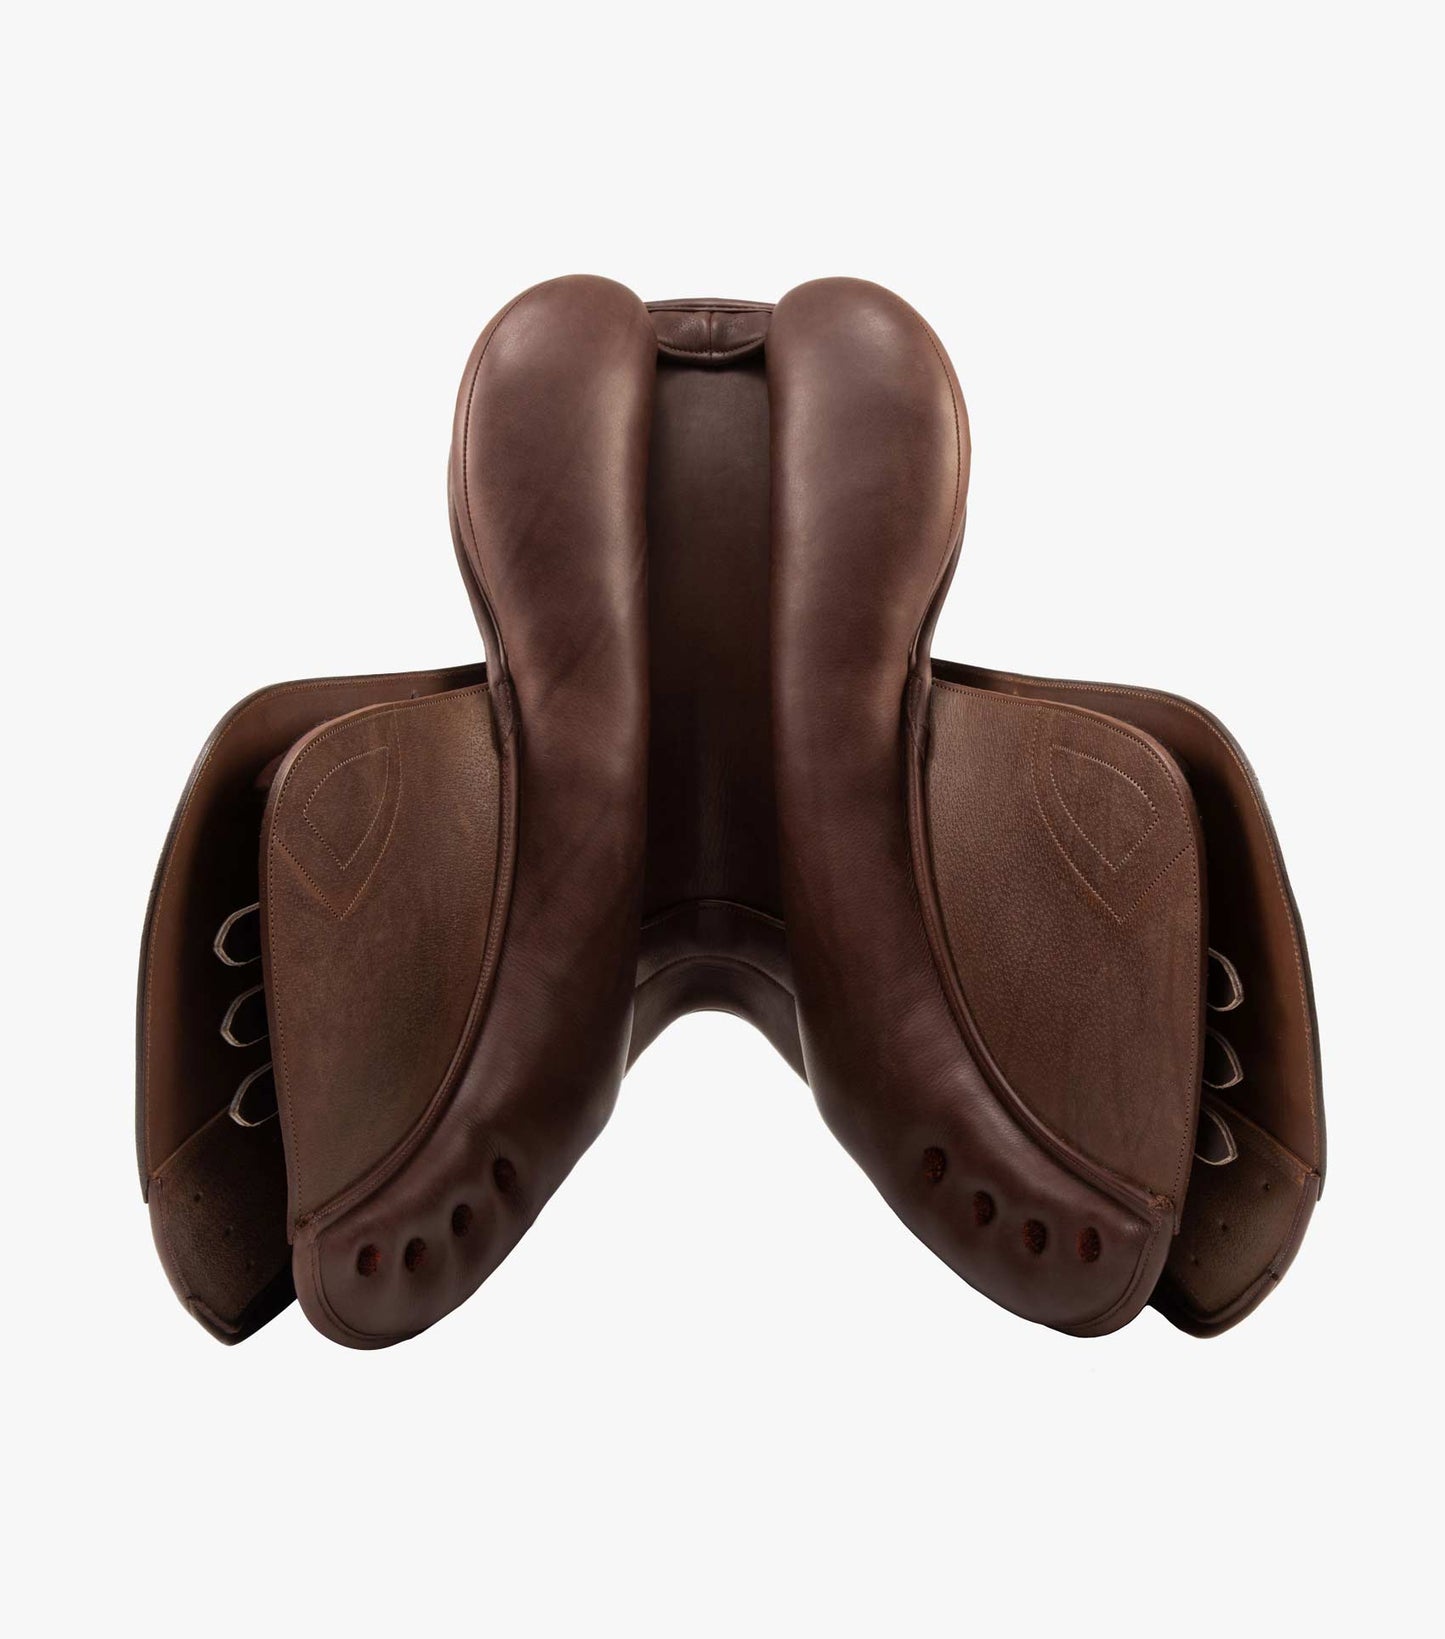 Premier Equine Lyon Leather Close Contact Jump Saddle (Brown)